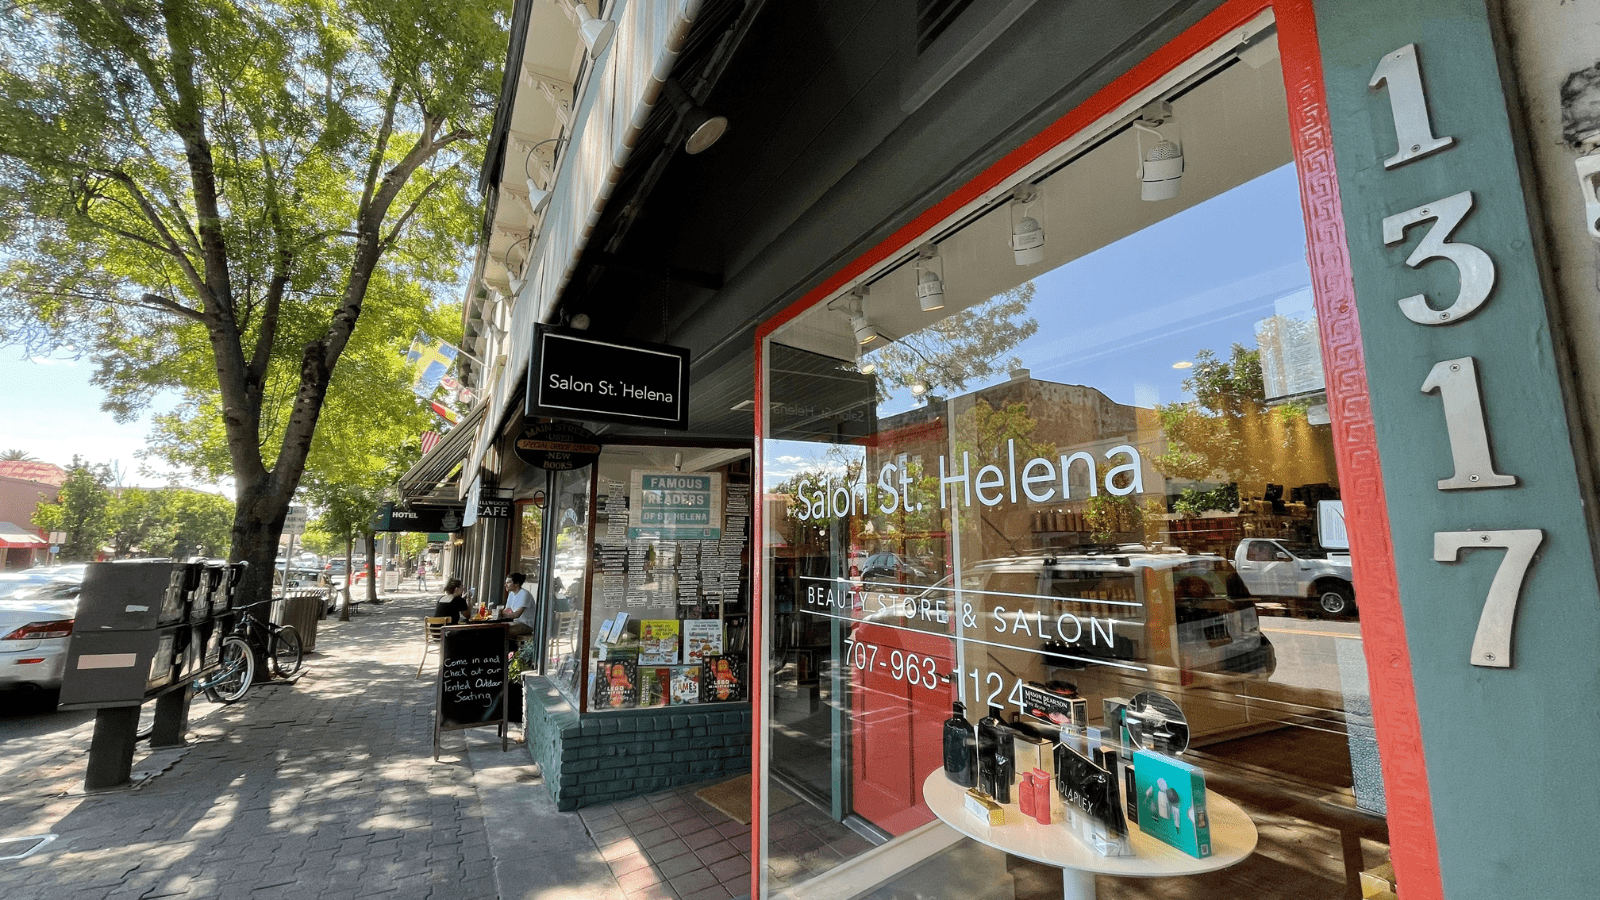 Salon St. Helena